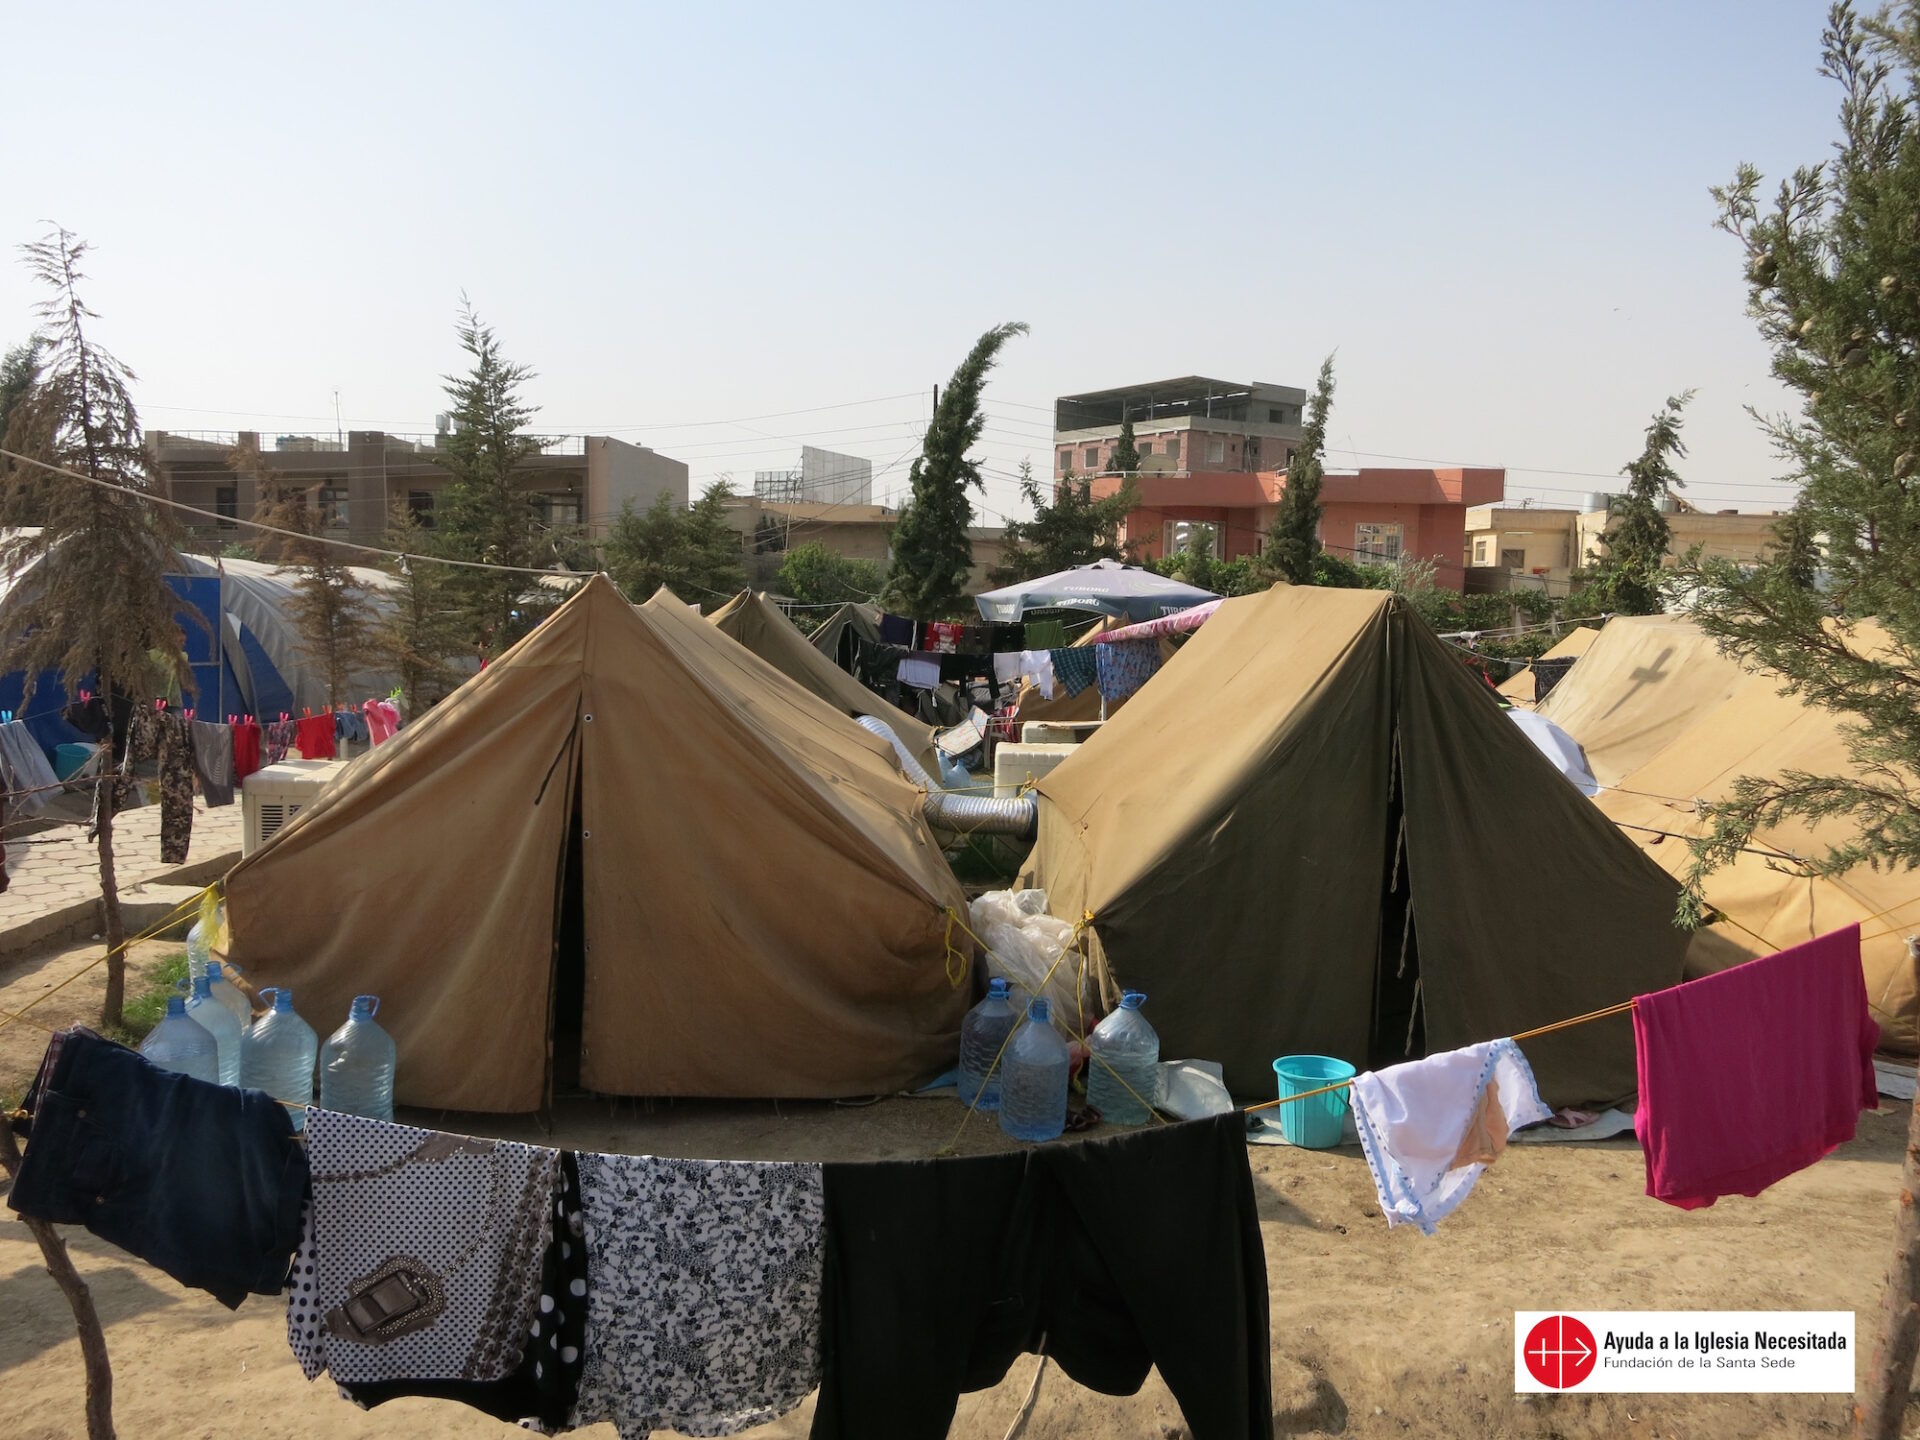 Iraq, 02. -07. 2014 Tents in a refugee camp in Erbil (Arbil) (October 2014)